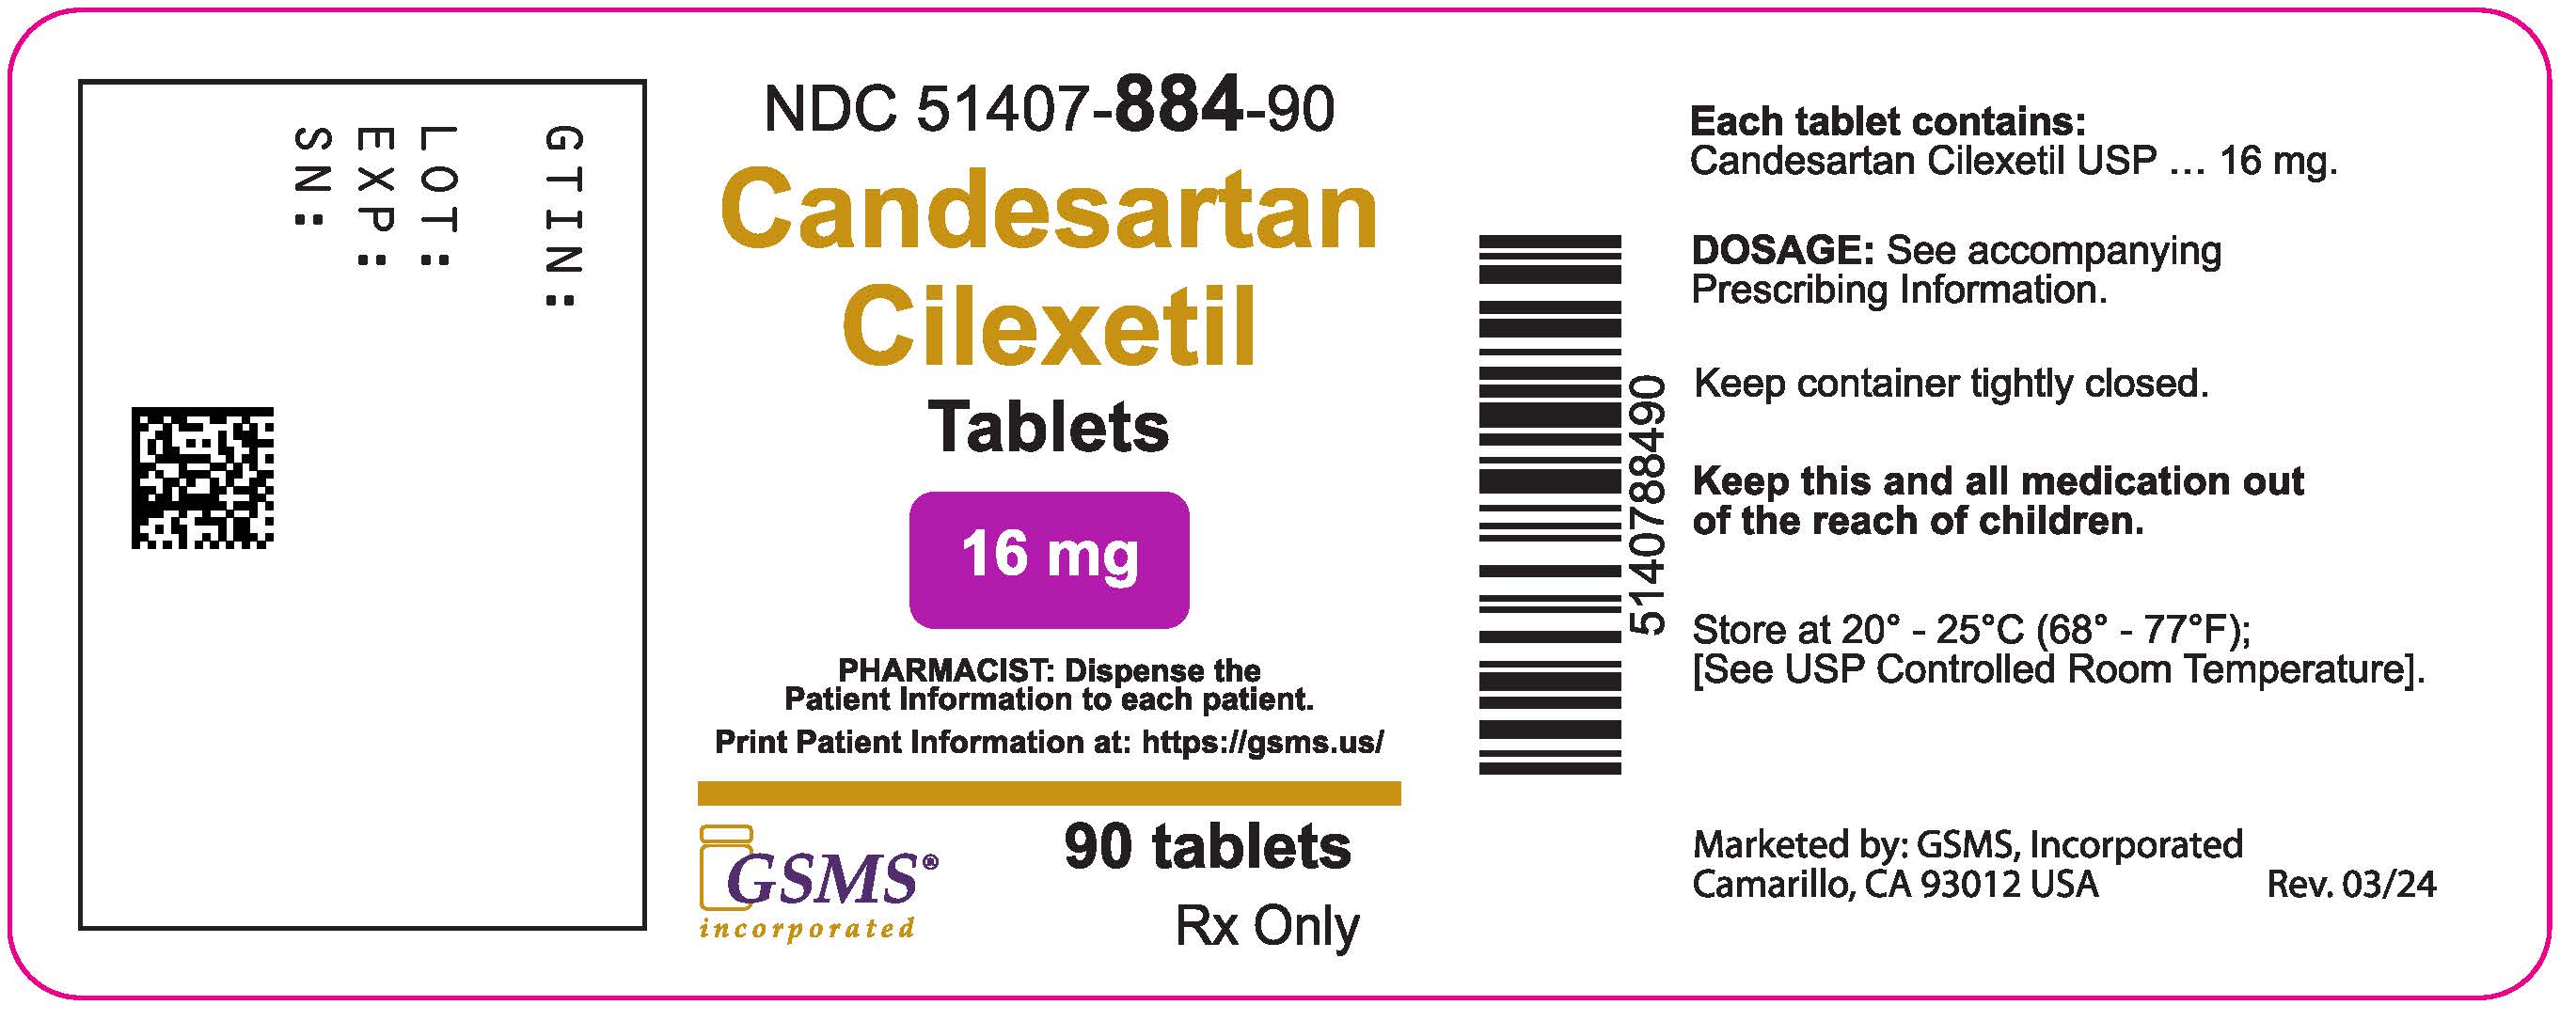 51407-884-90 - Candesartan Cilexetil 16 mg - Rev. 0324.jpg